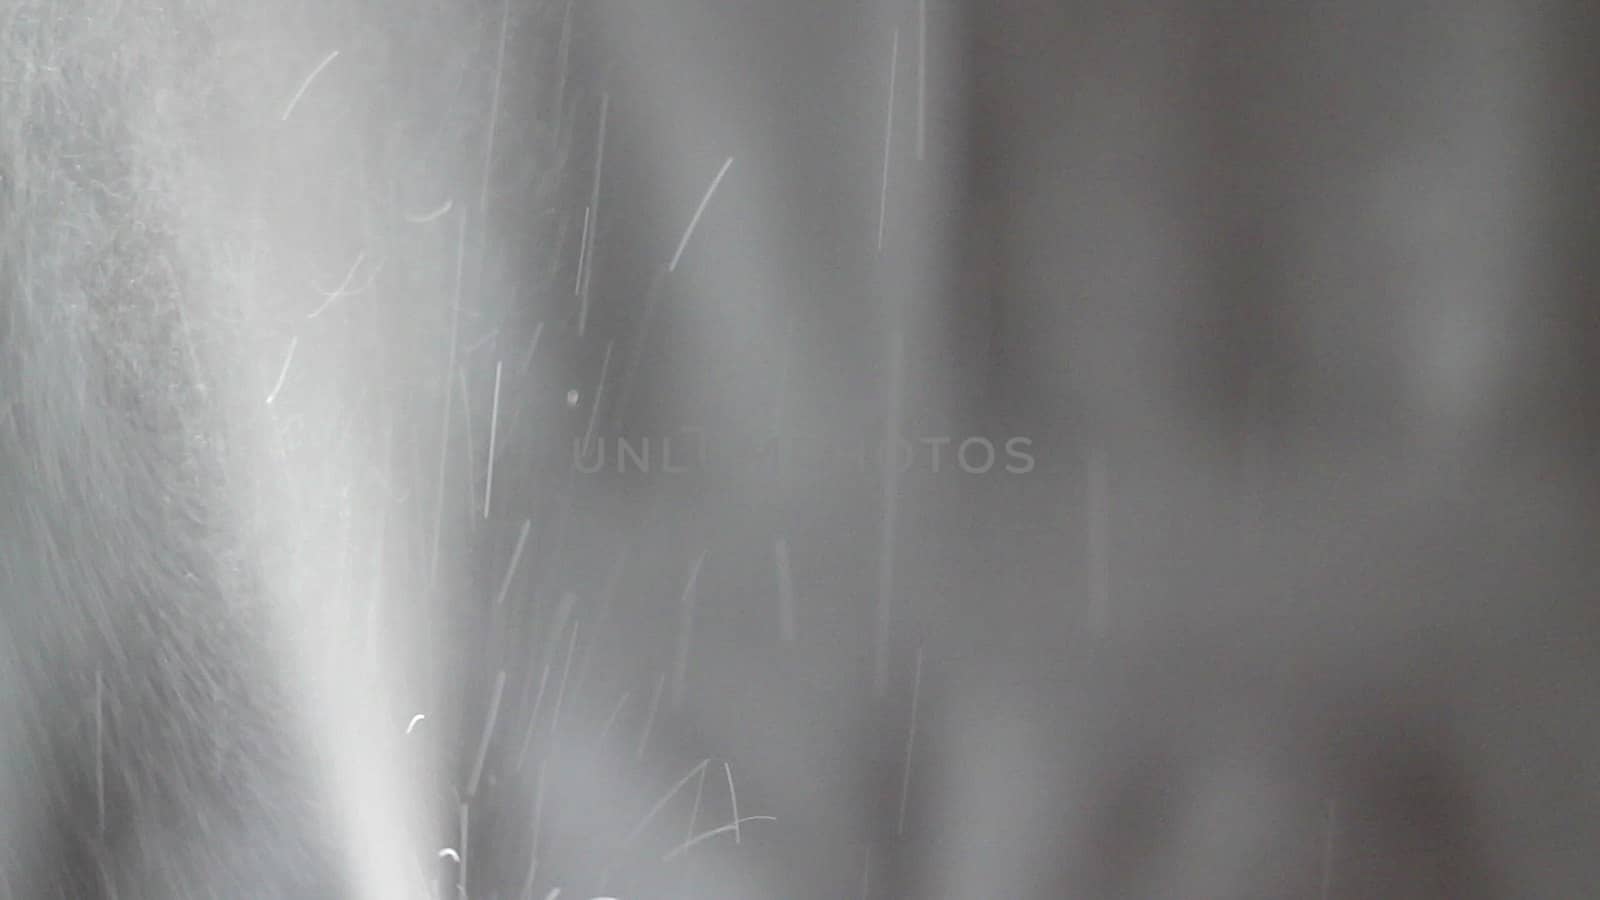 Aerosol can being sprayed against a grey background by nolimit046